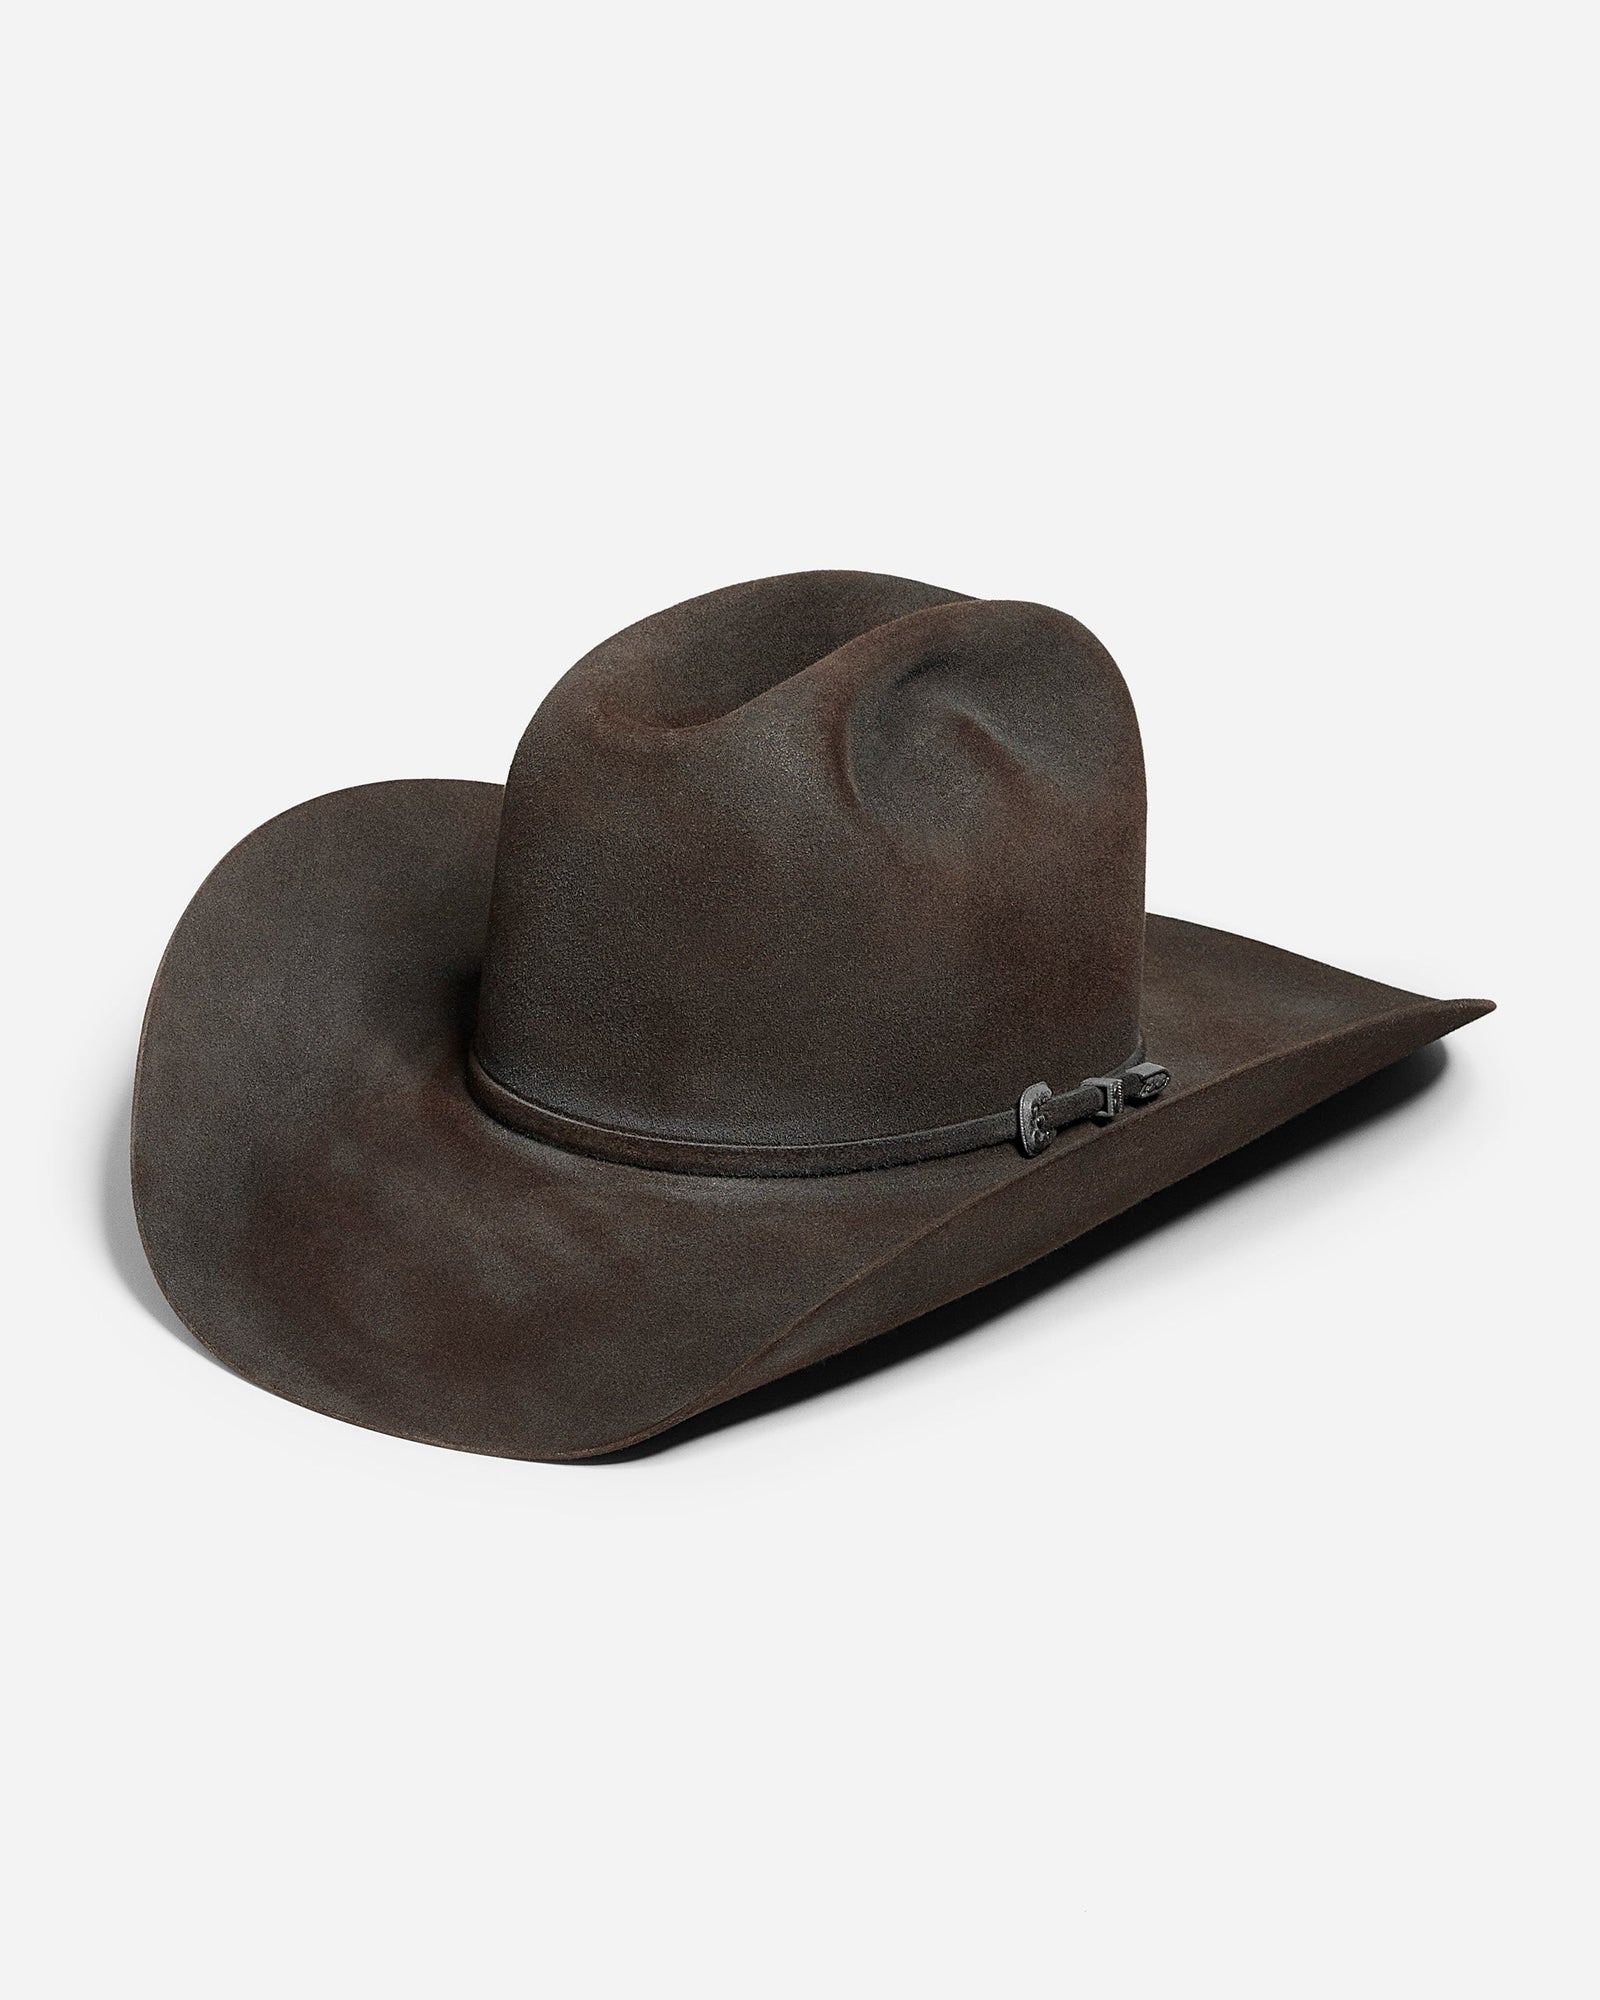 Rip's Cattleman Crown Distressed Brown Cowboy Hat